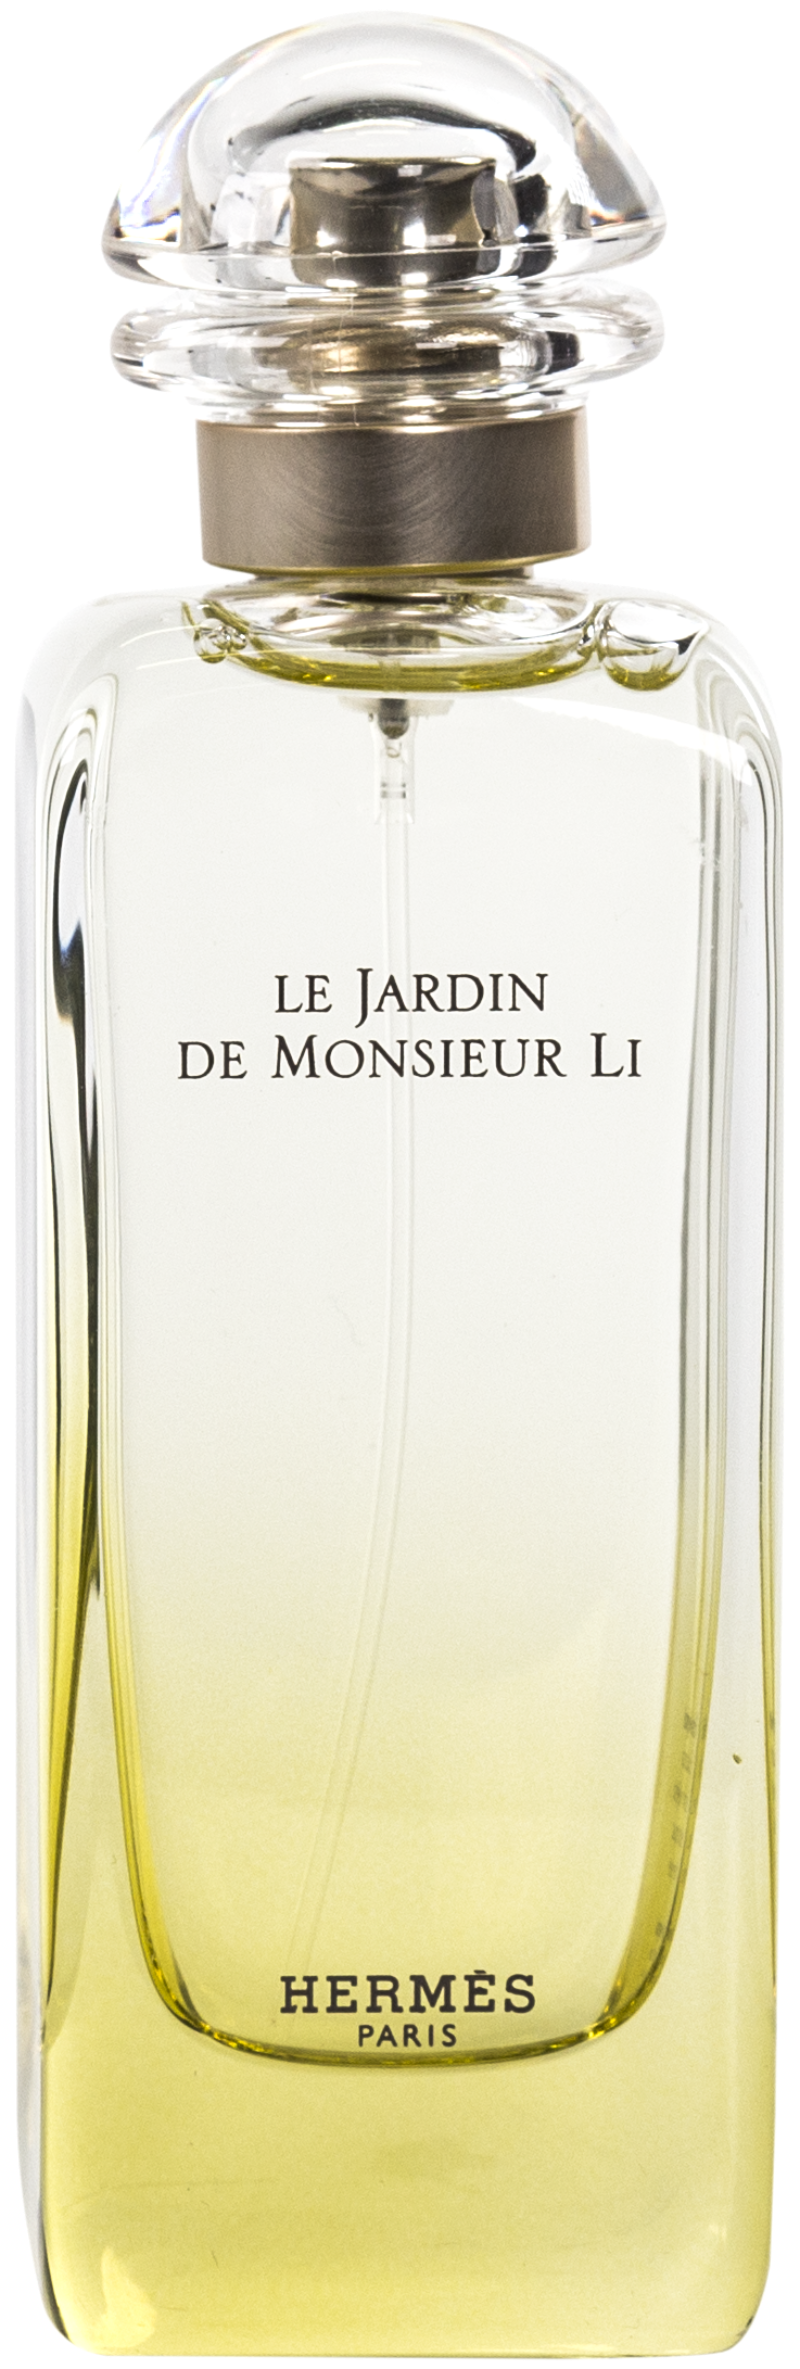 Li De ml EdT 50 Monsieur Jardin Le Hermes -